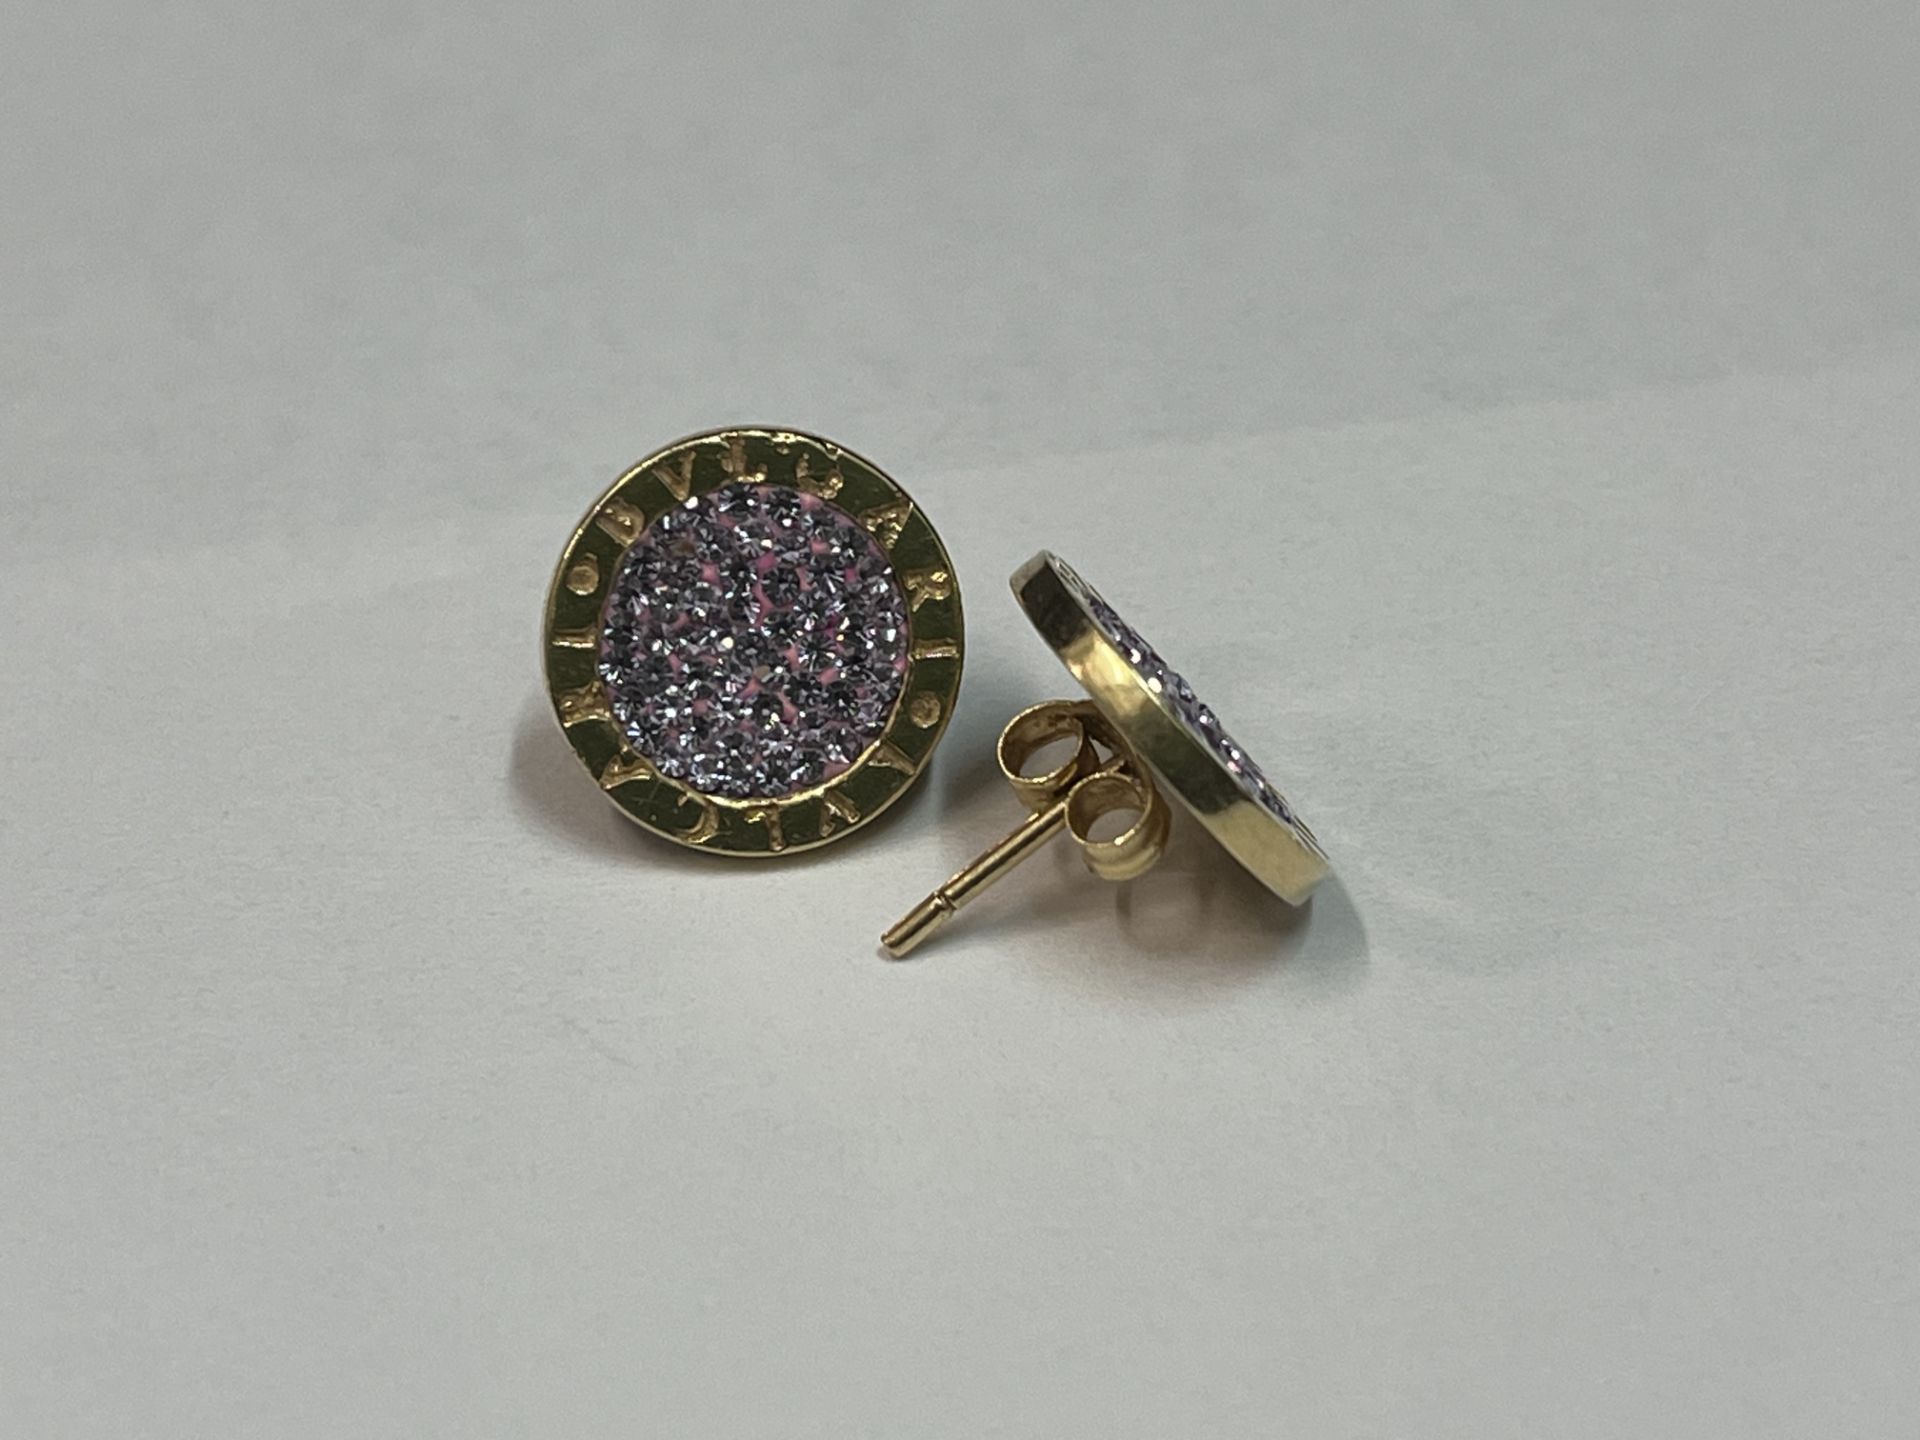 Pair of circular 18k gold and enamel oval earrings